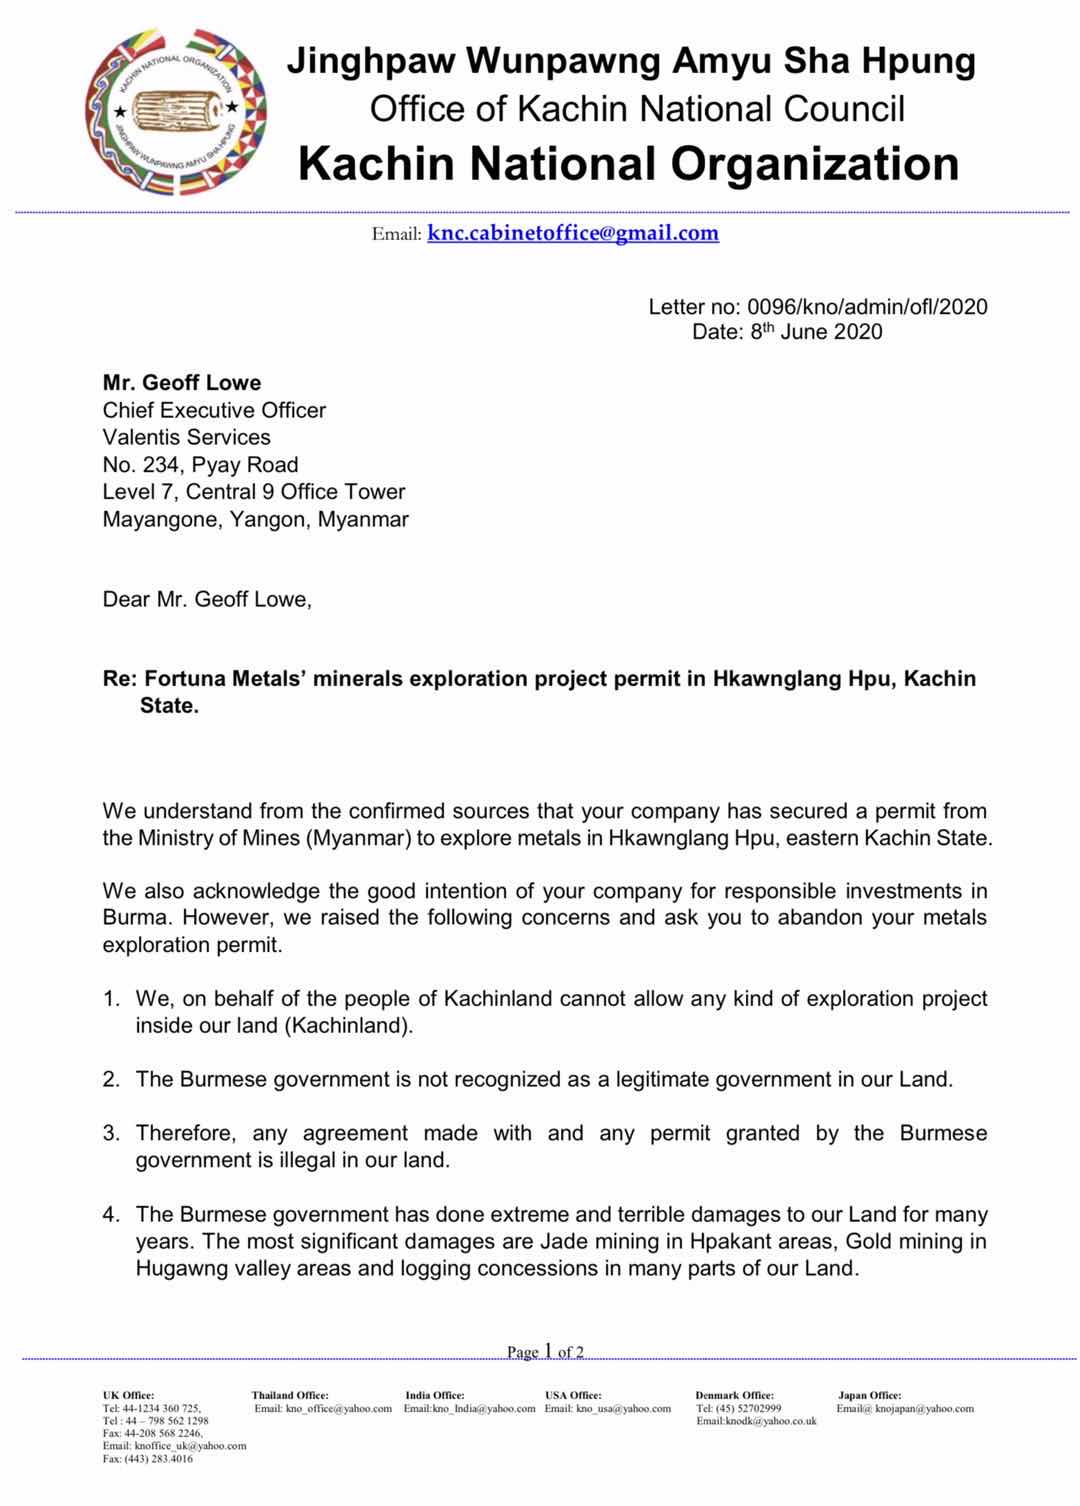 KNO致函澳大利亚公司反对其在克钦邦进行矿业勘探与投资行为